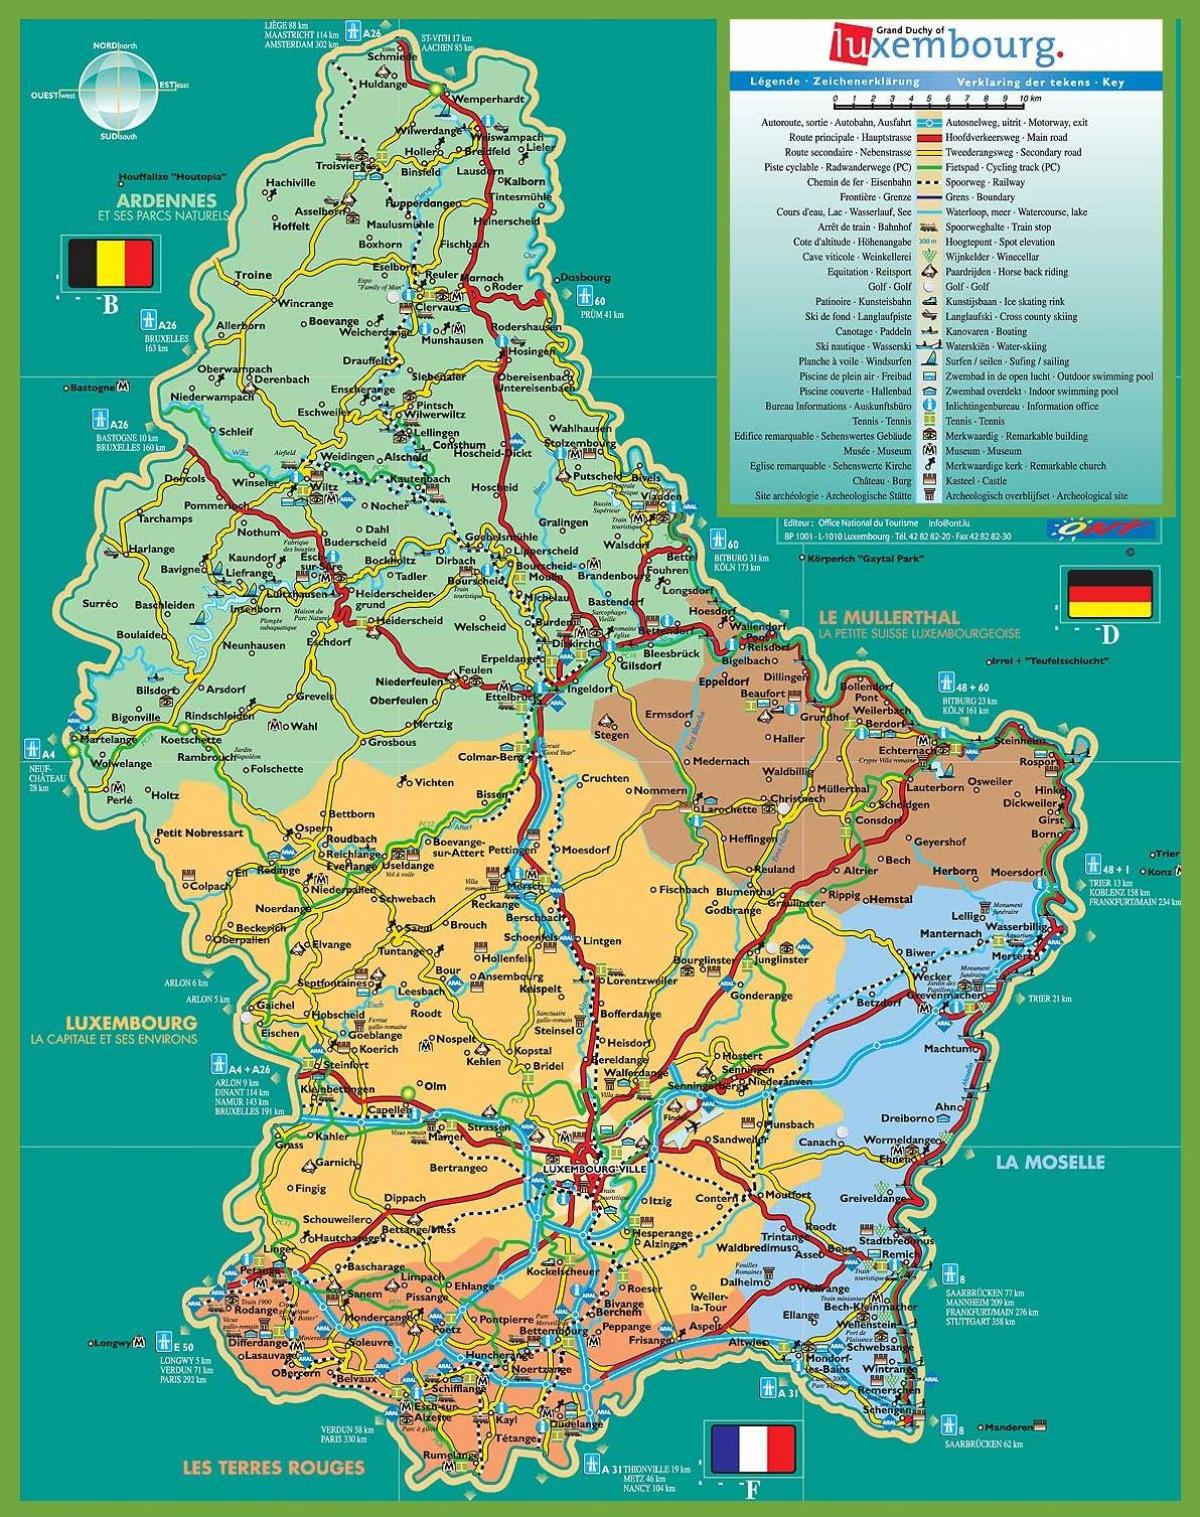 Luxembourg hấp dẫn, bản đồ